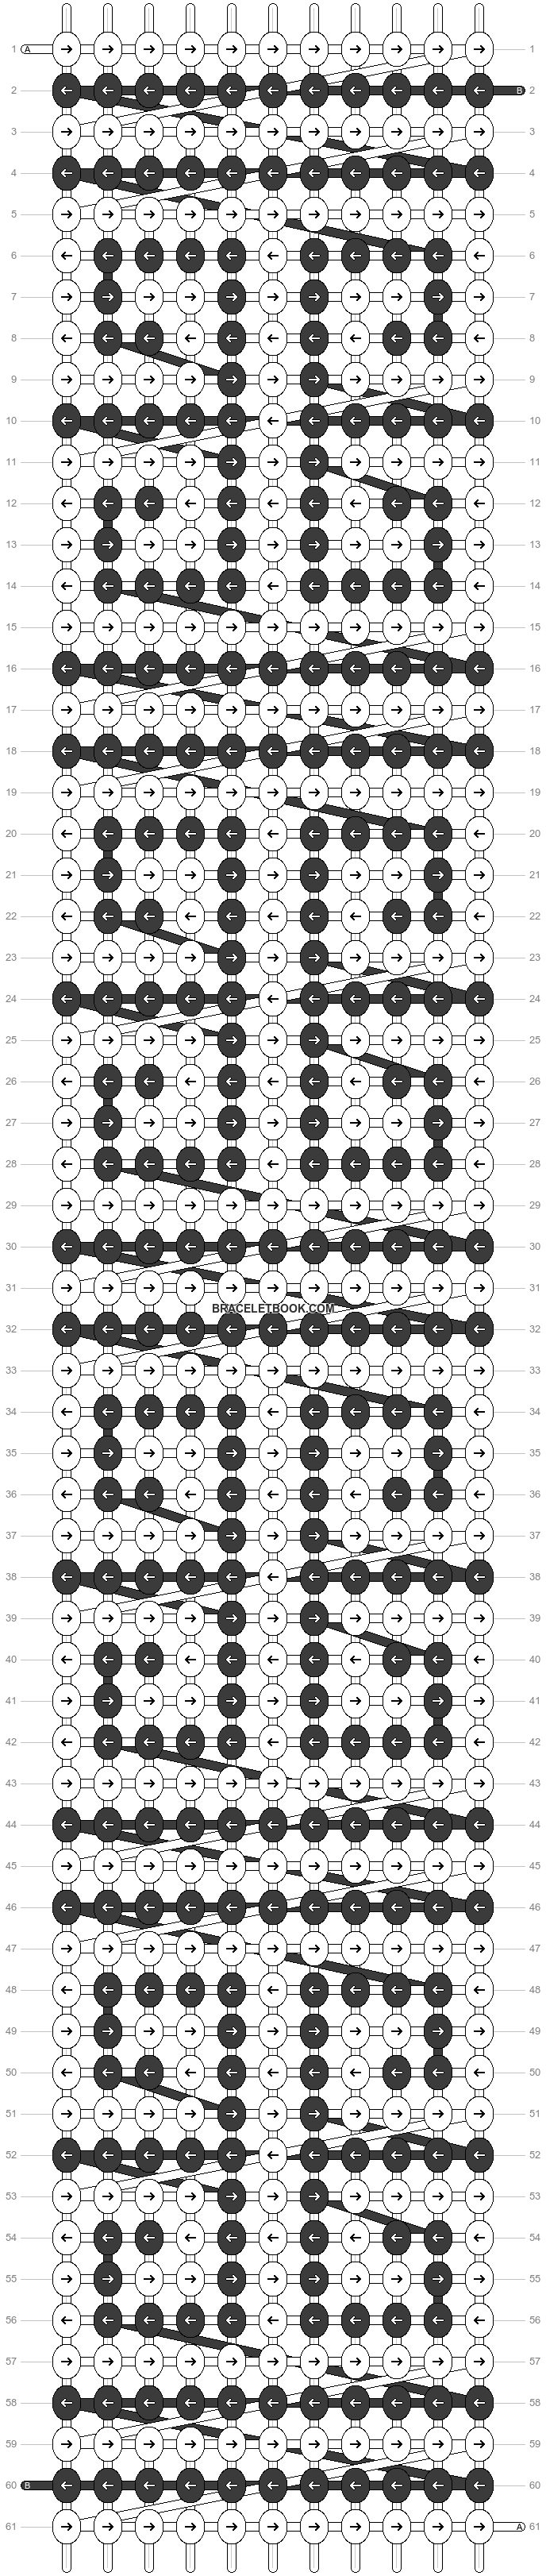 Alpha pattern #20945 variation #59577 pattern